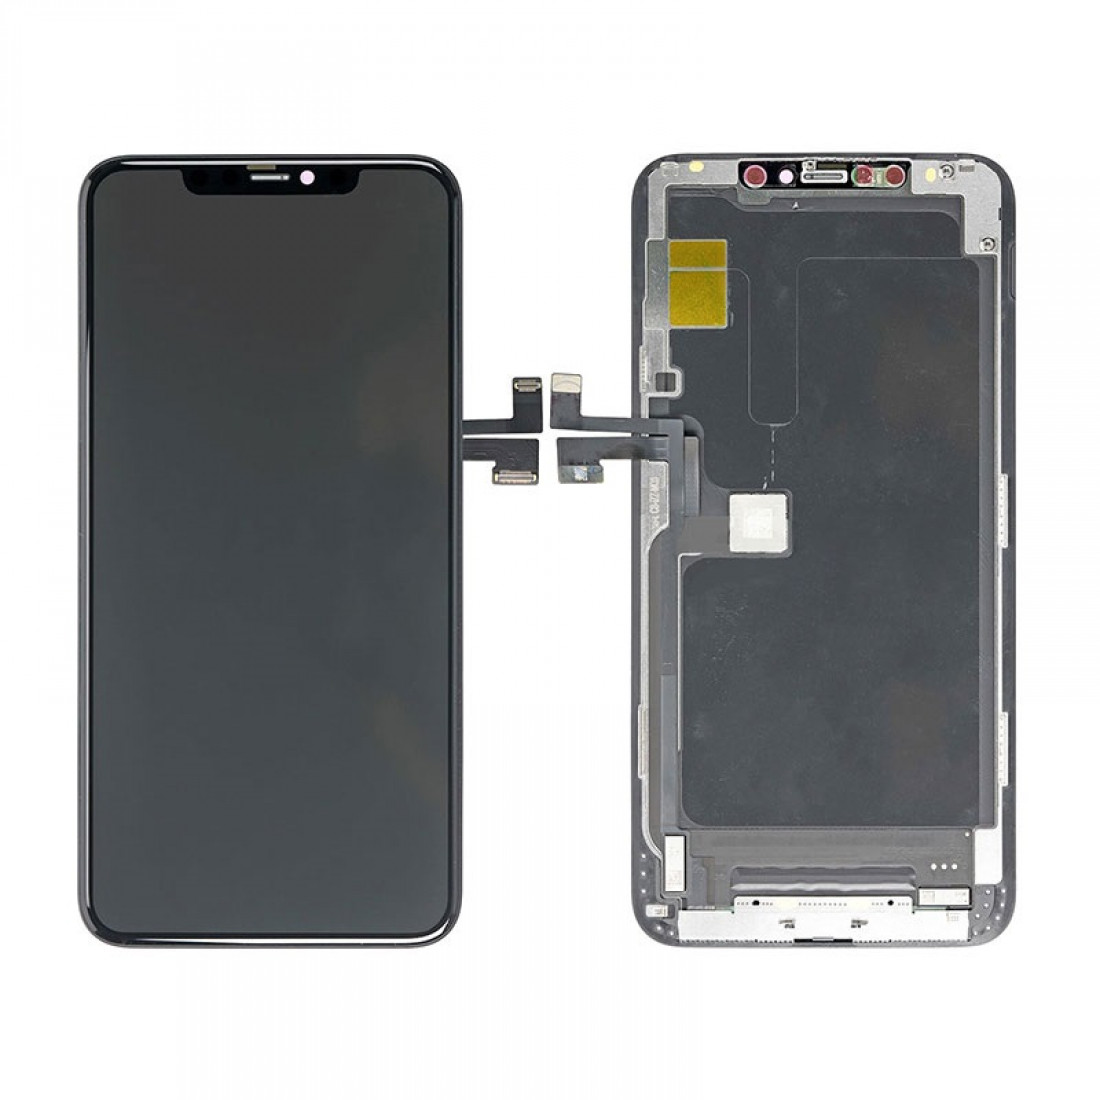 iPhone-11-Pro-Max-OEM-LCD-Display-Original-Quality-06012019-1-p-1100x1100